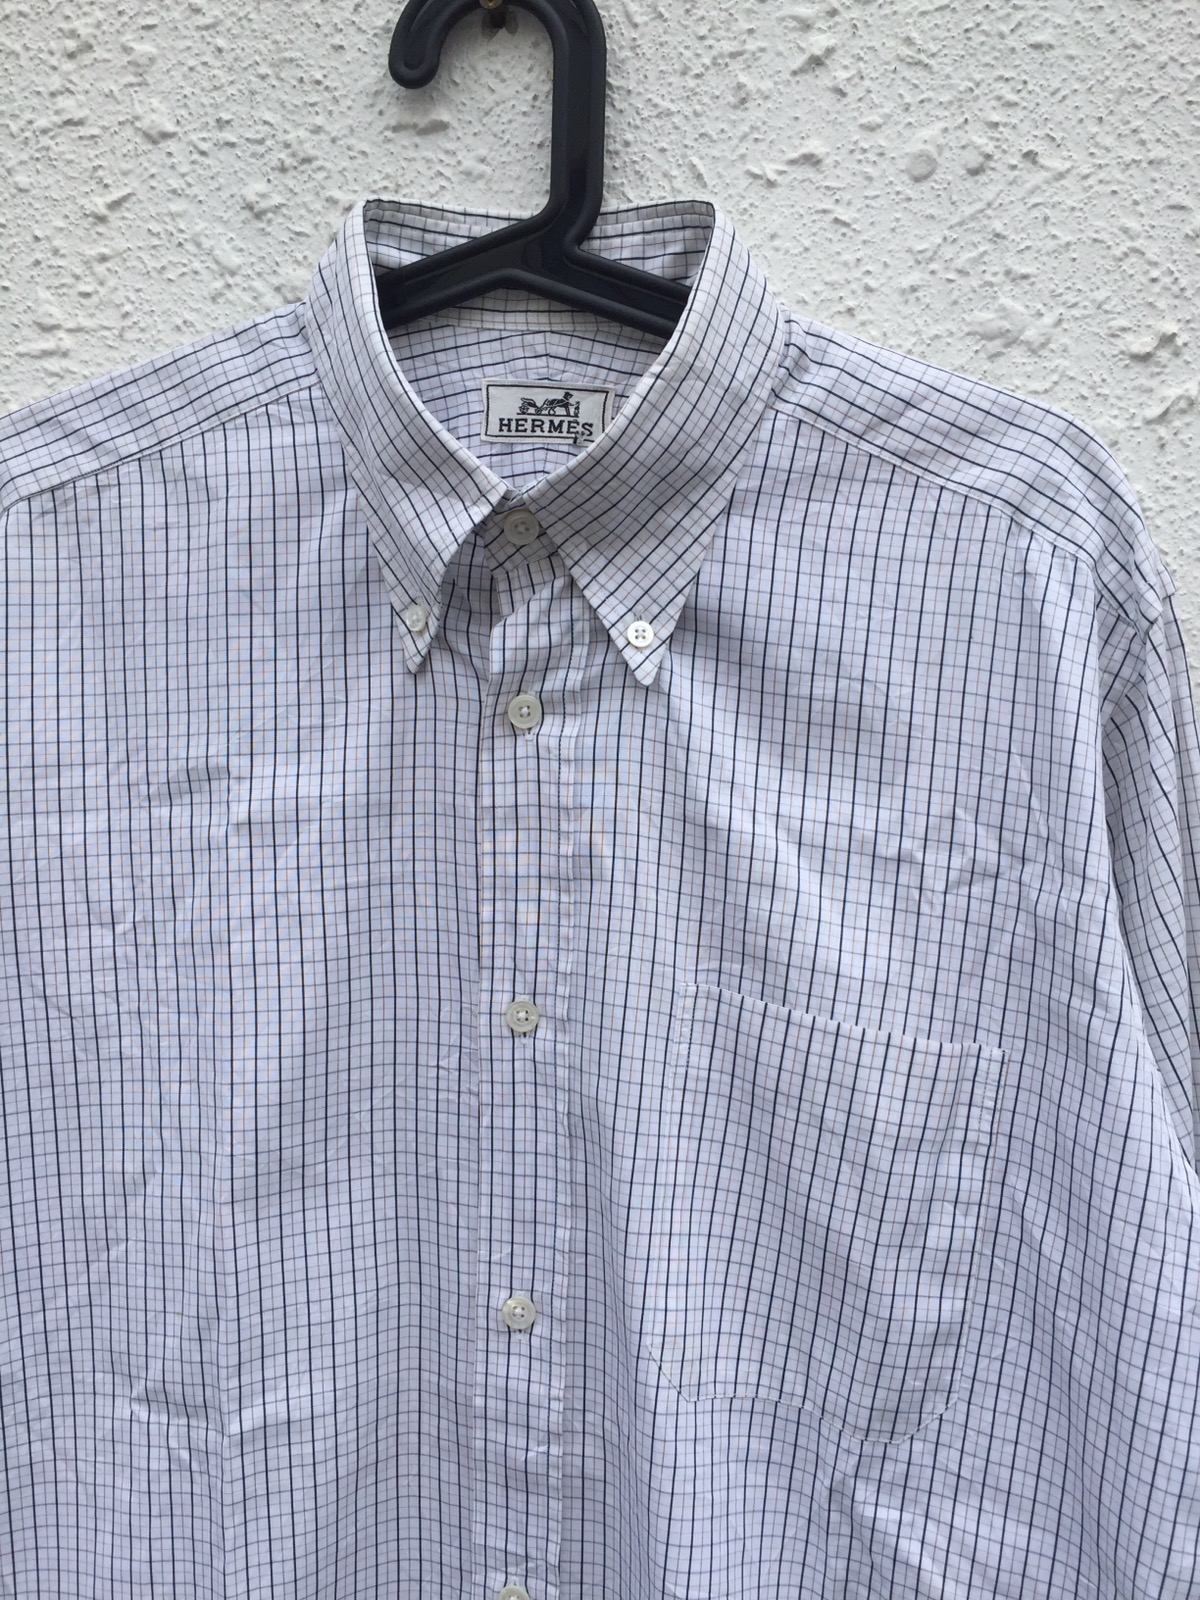 Vintage Hermes Basic Checkered Long Sleeve Shirt - 3